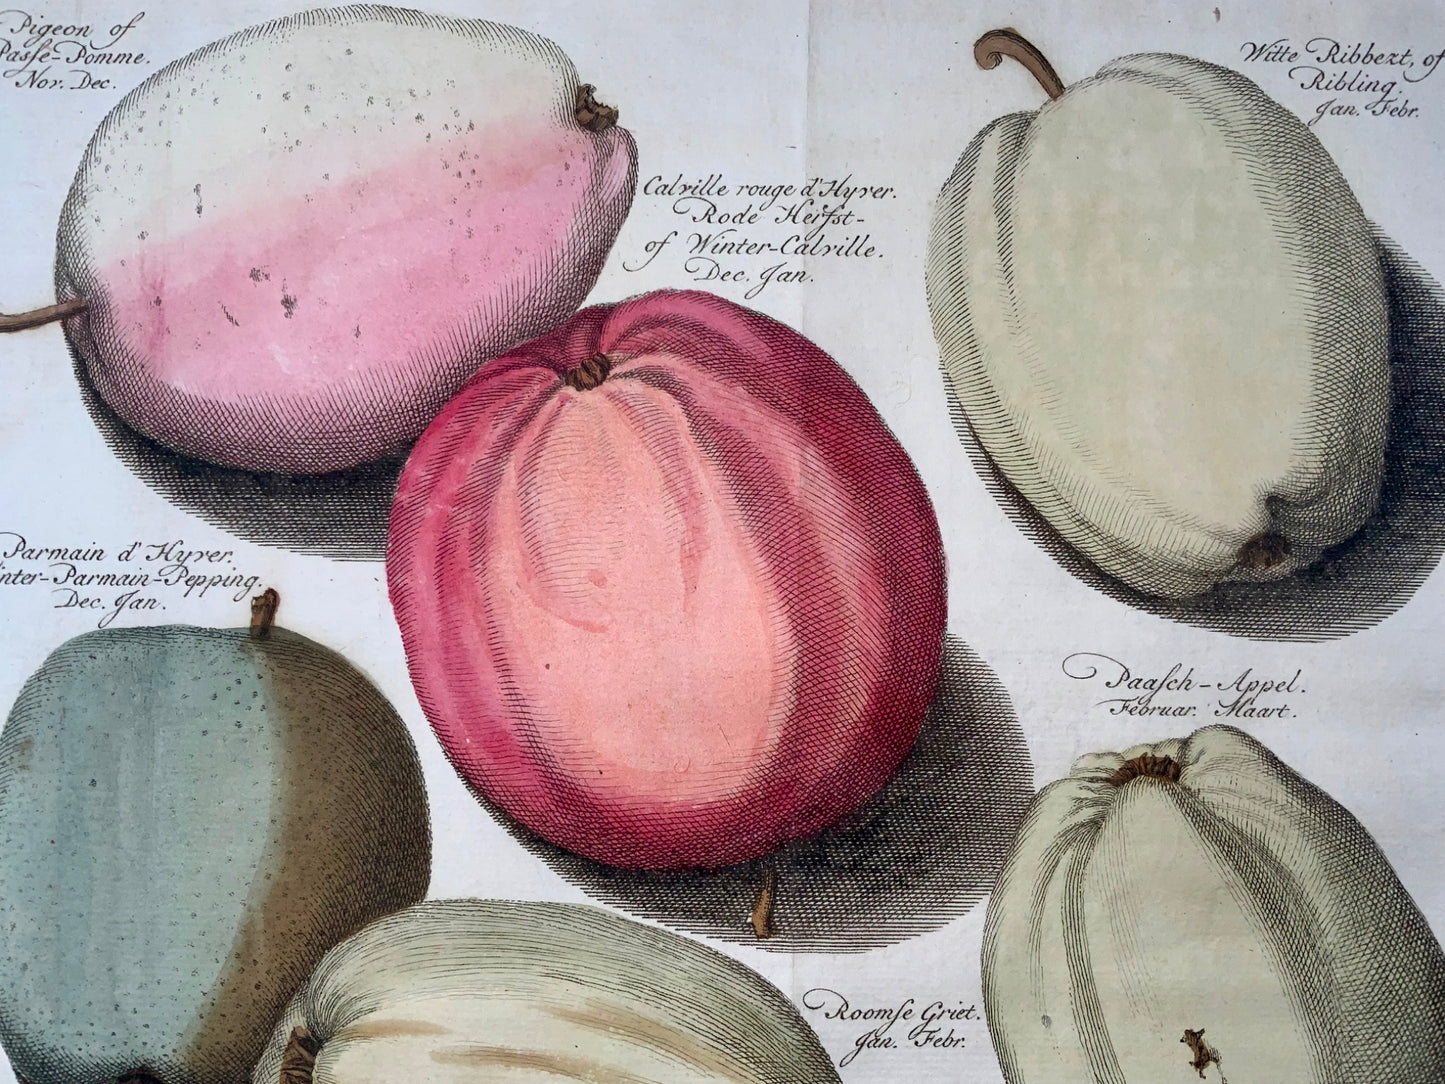 1758 Apples, fruit, folio copper engraving after Knoop by J. Folkema, botany